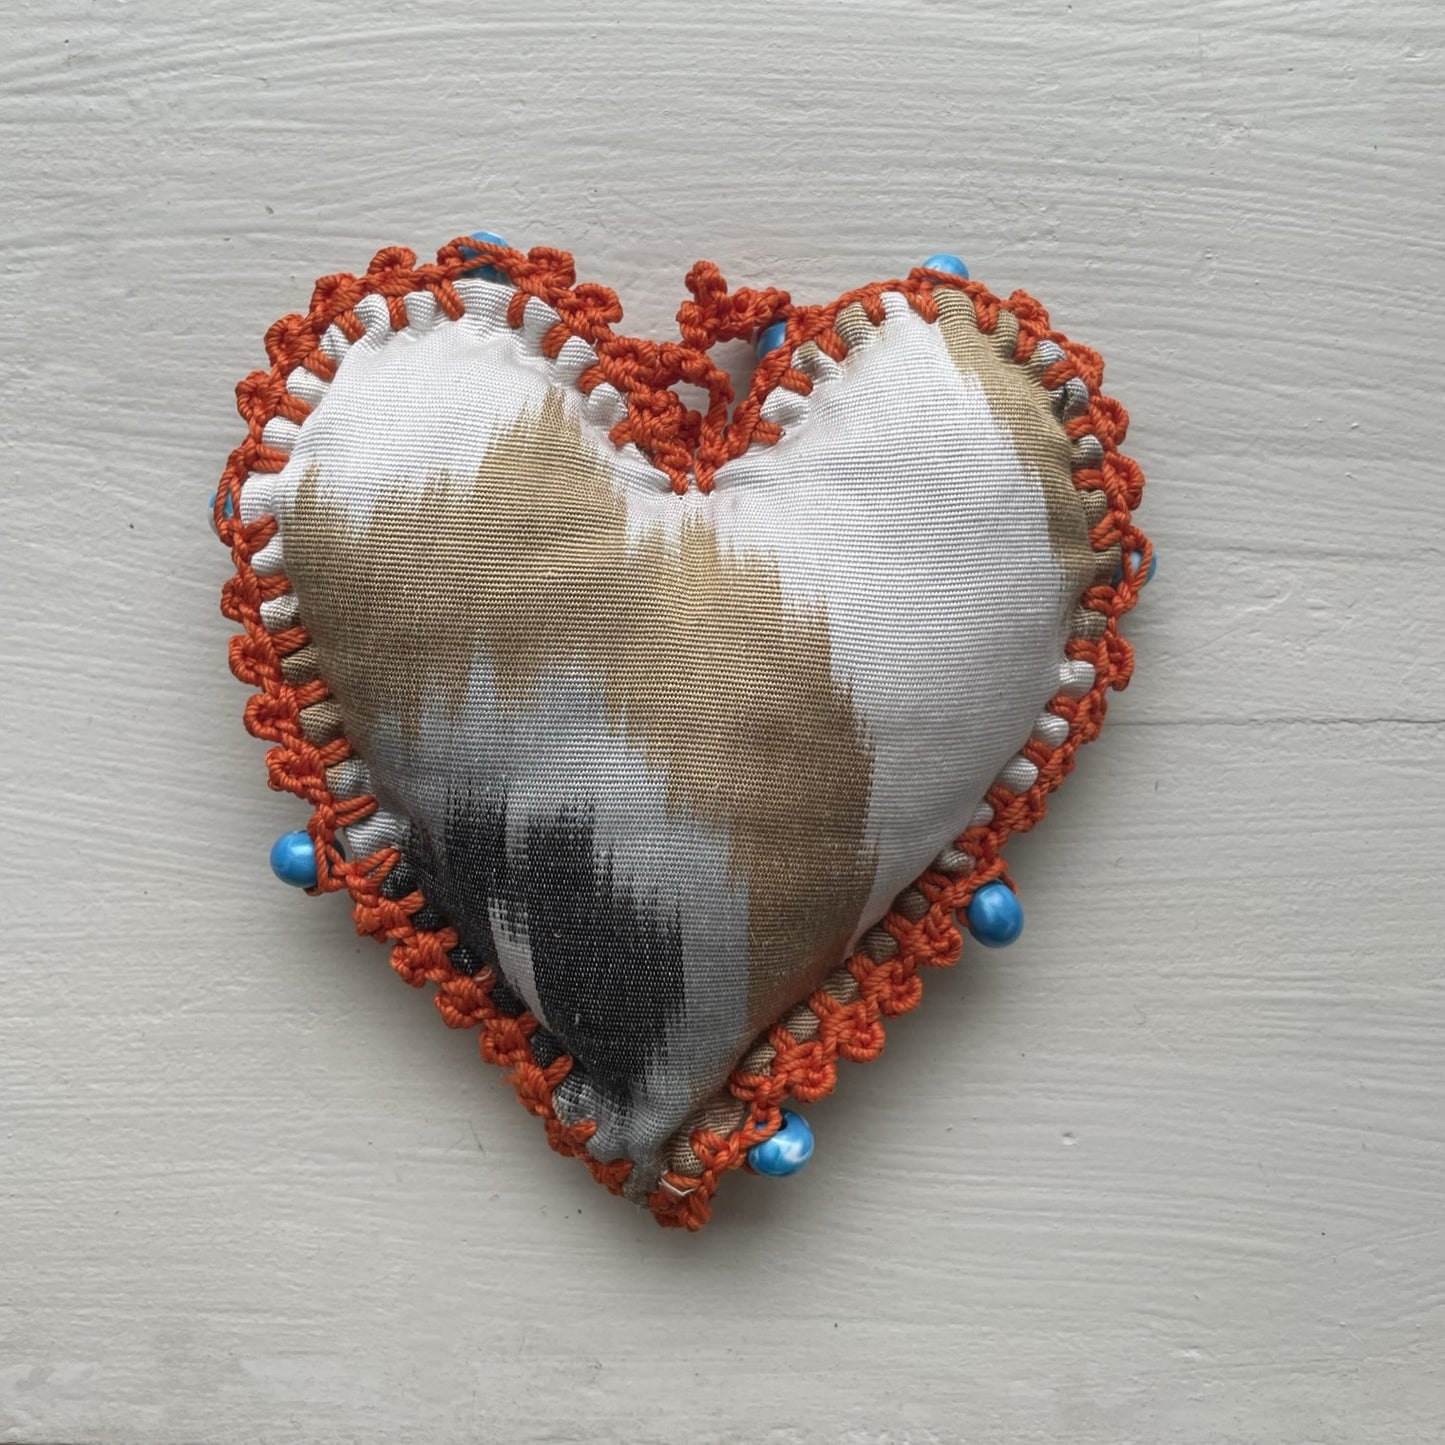 Small Crochet Edged Lavender Hearts